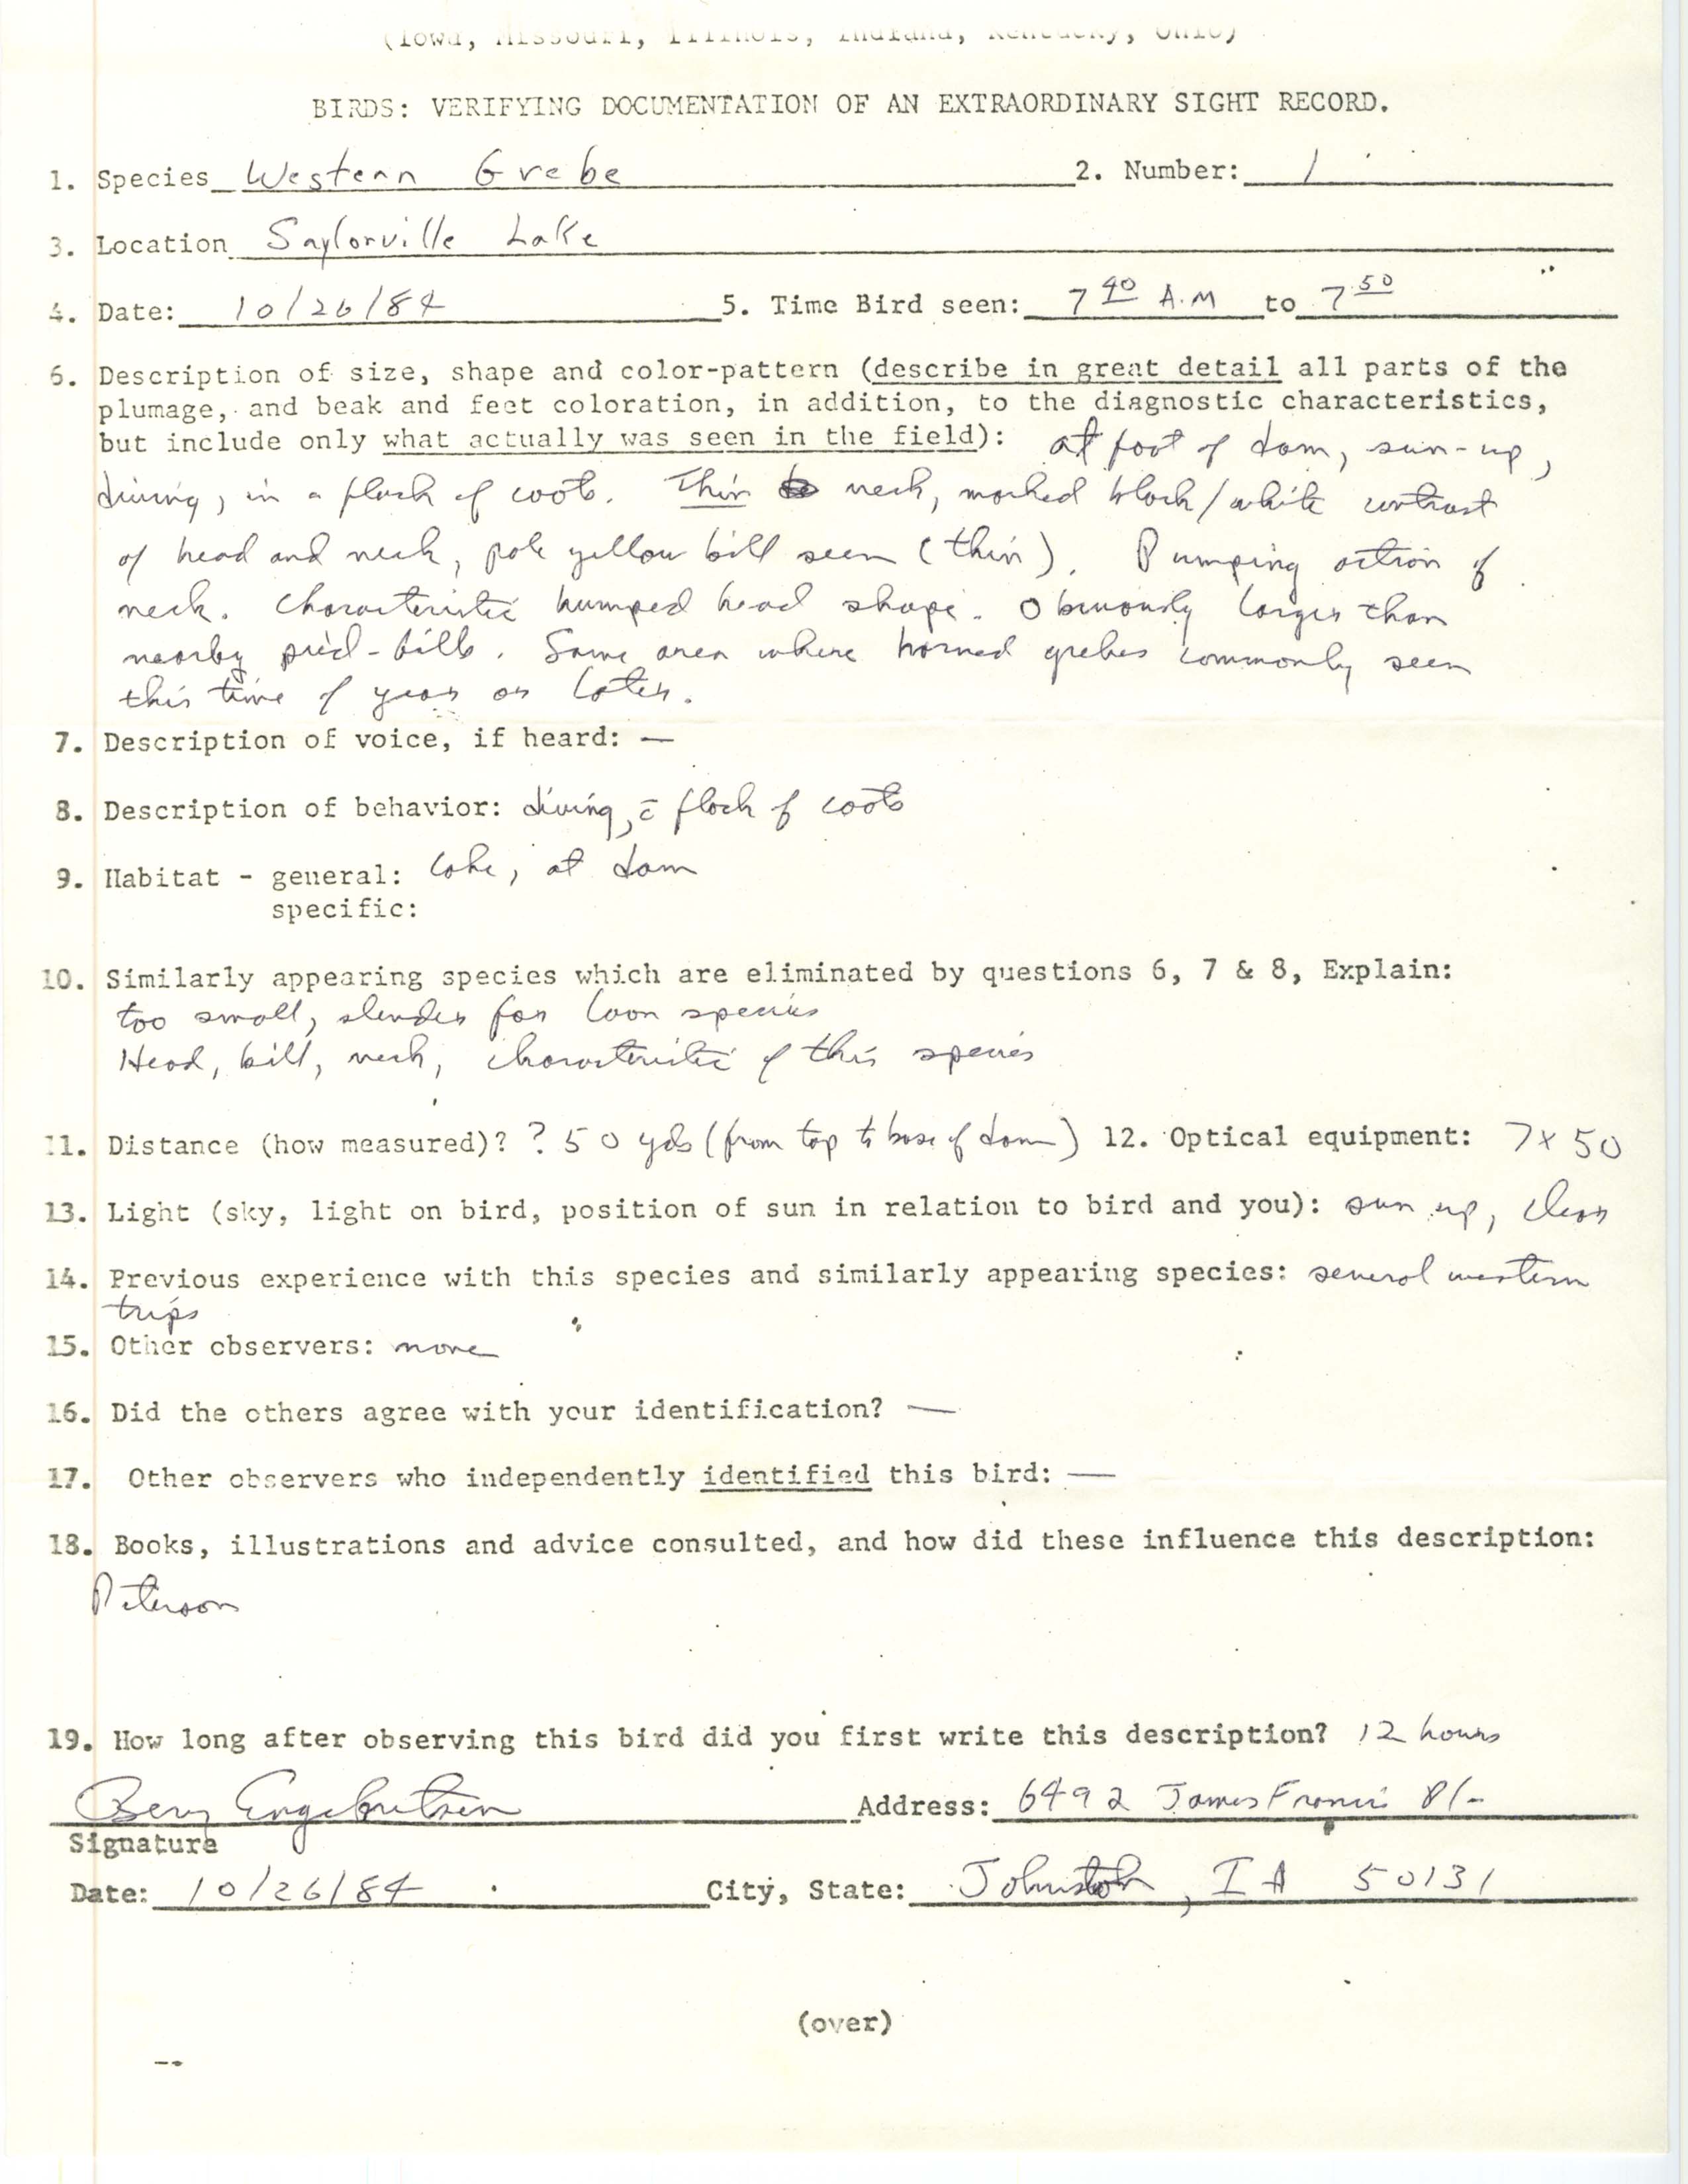 Rare bird documentation form for Western Grebe at Saylorville Lake, 1984